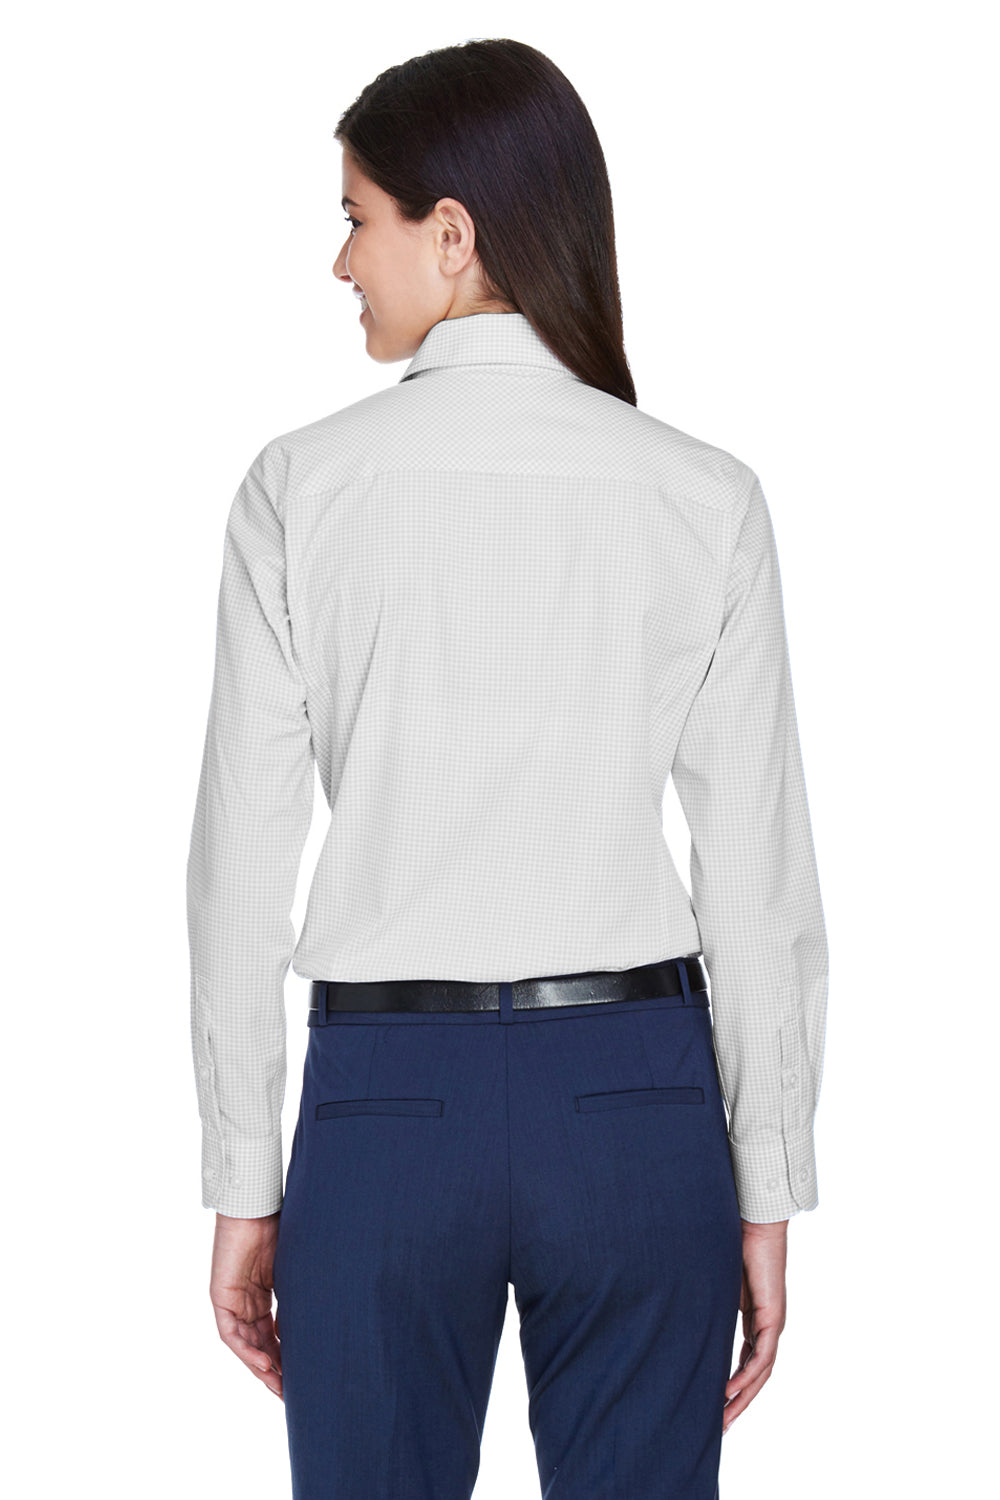 Devon & Jones D640W Womens Crown Woven Collection Wrinkle Resistant Long Sleeve Button Down Shirt Silver Grey Back